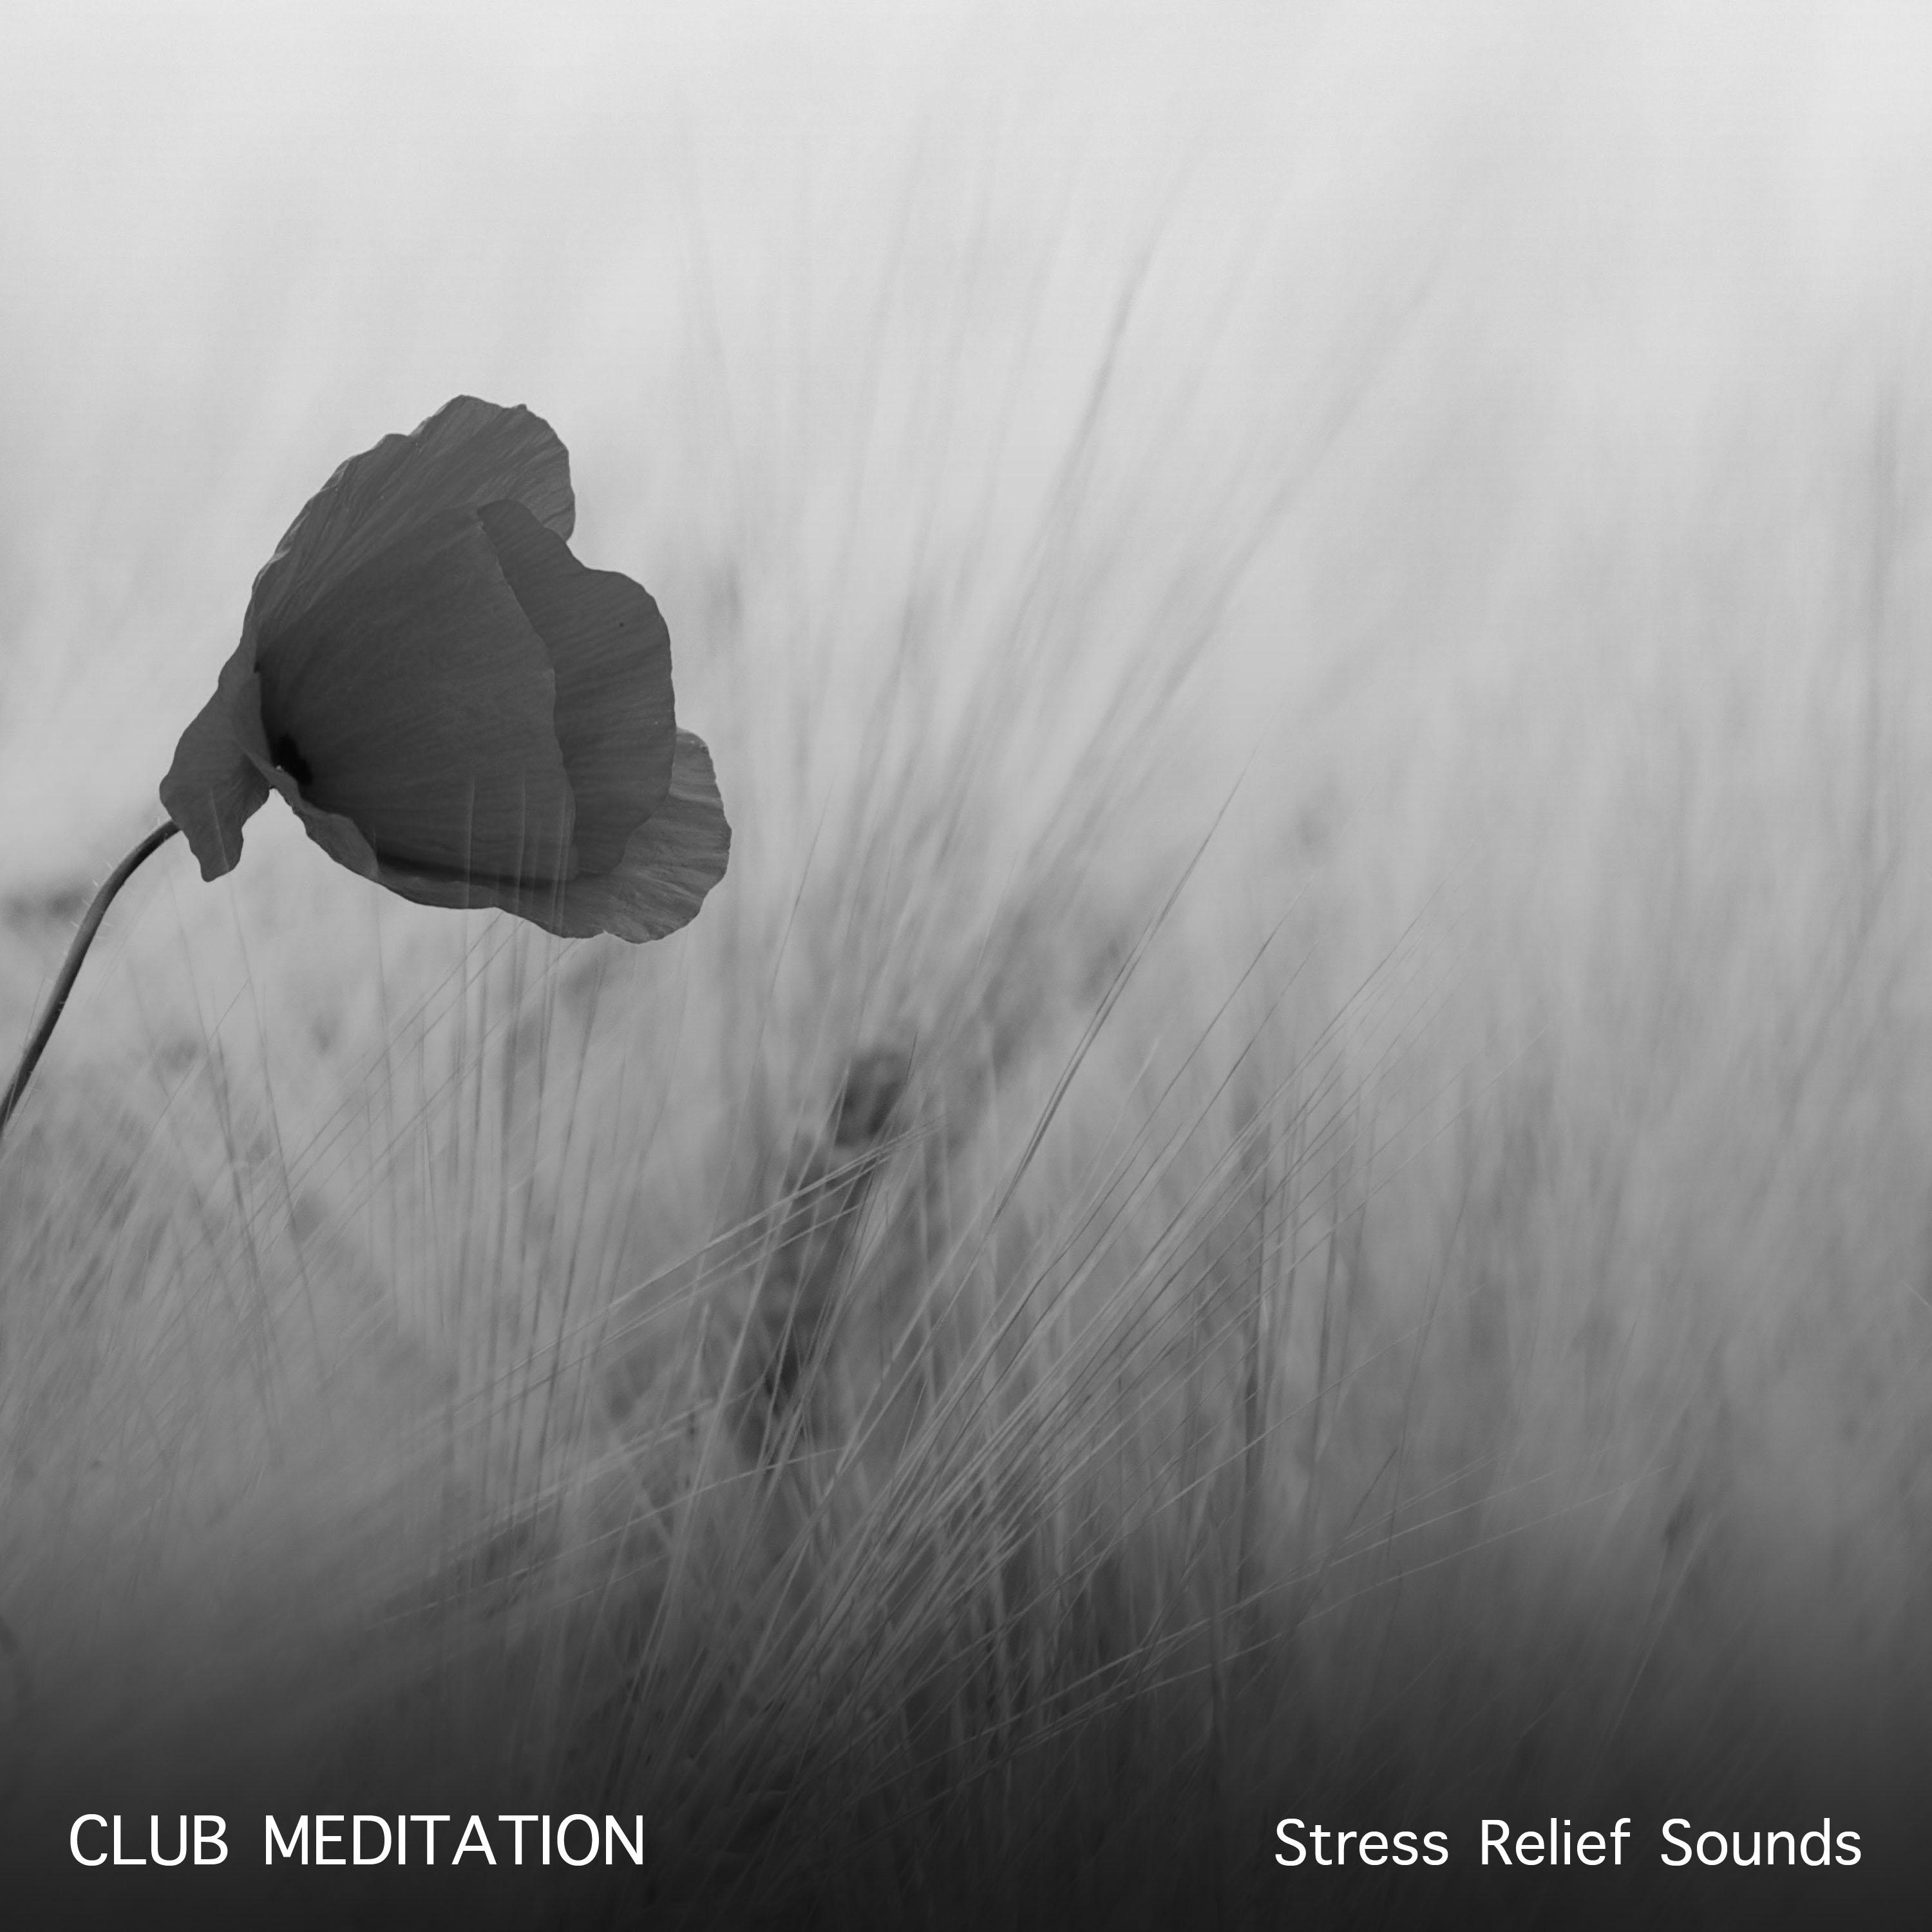 16 Stress Relief Sounds: Club Meditation